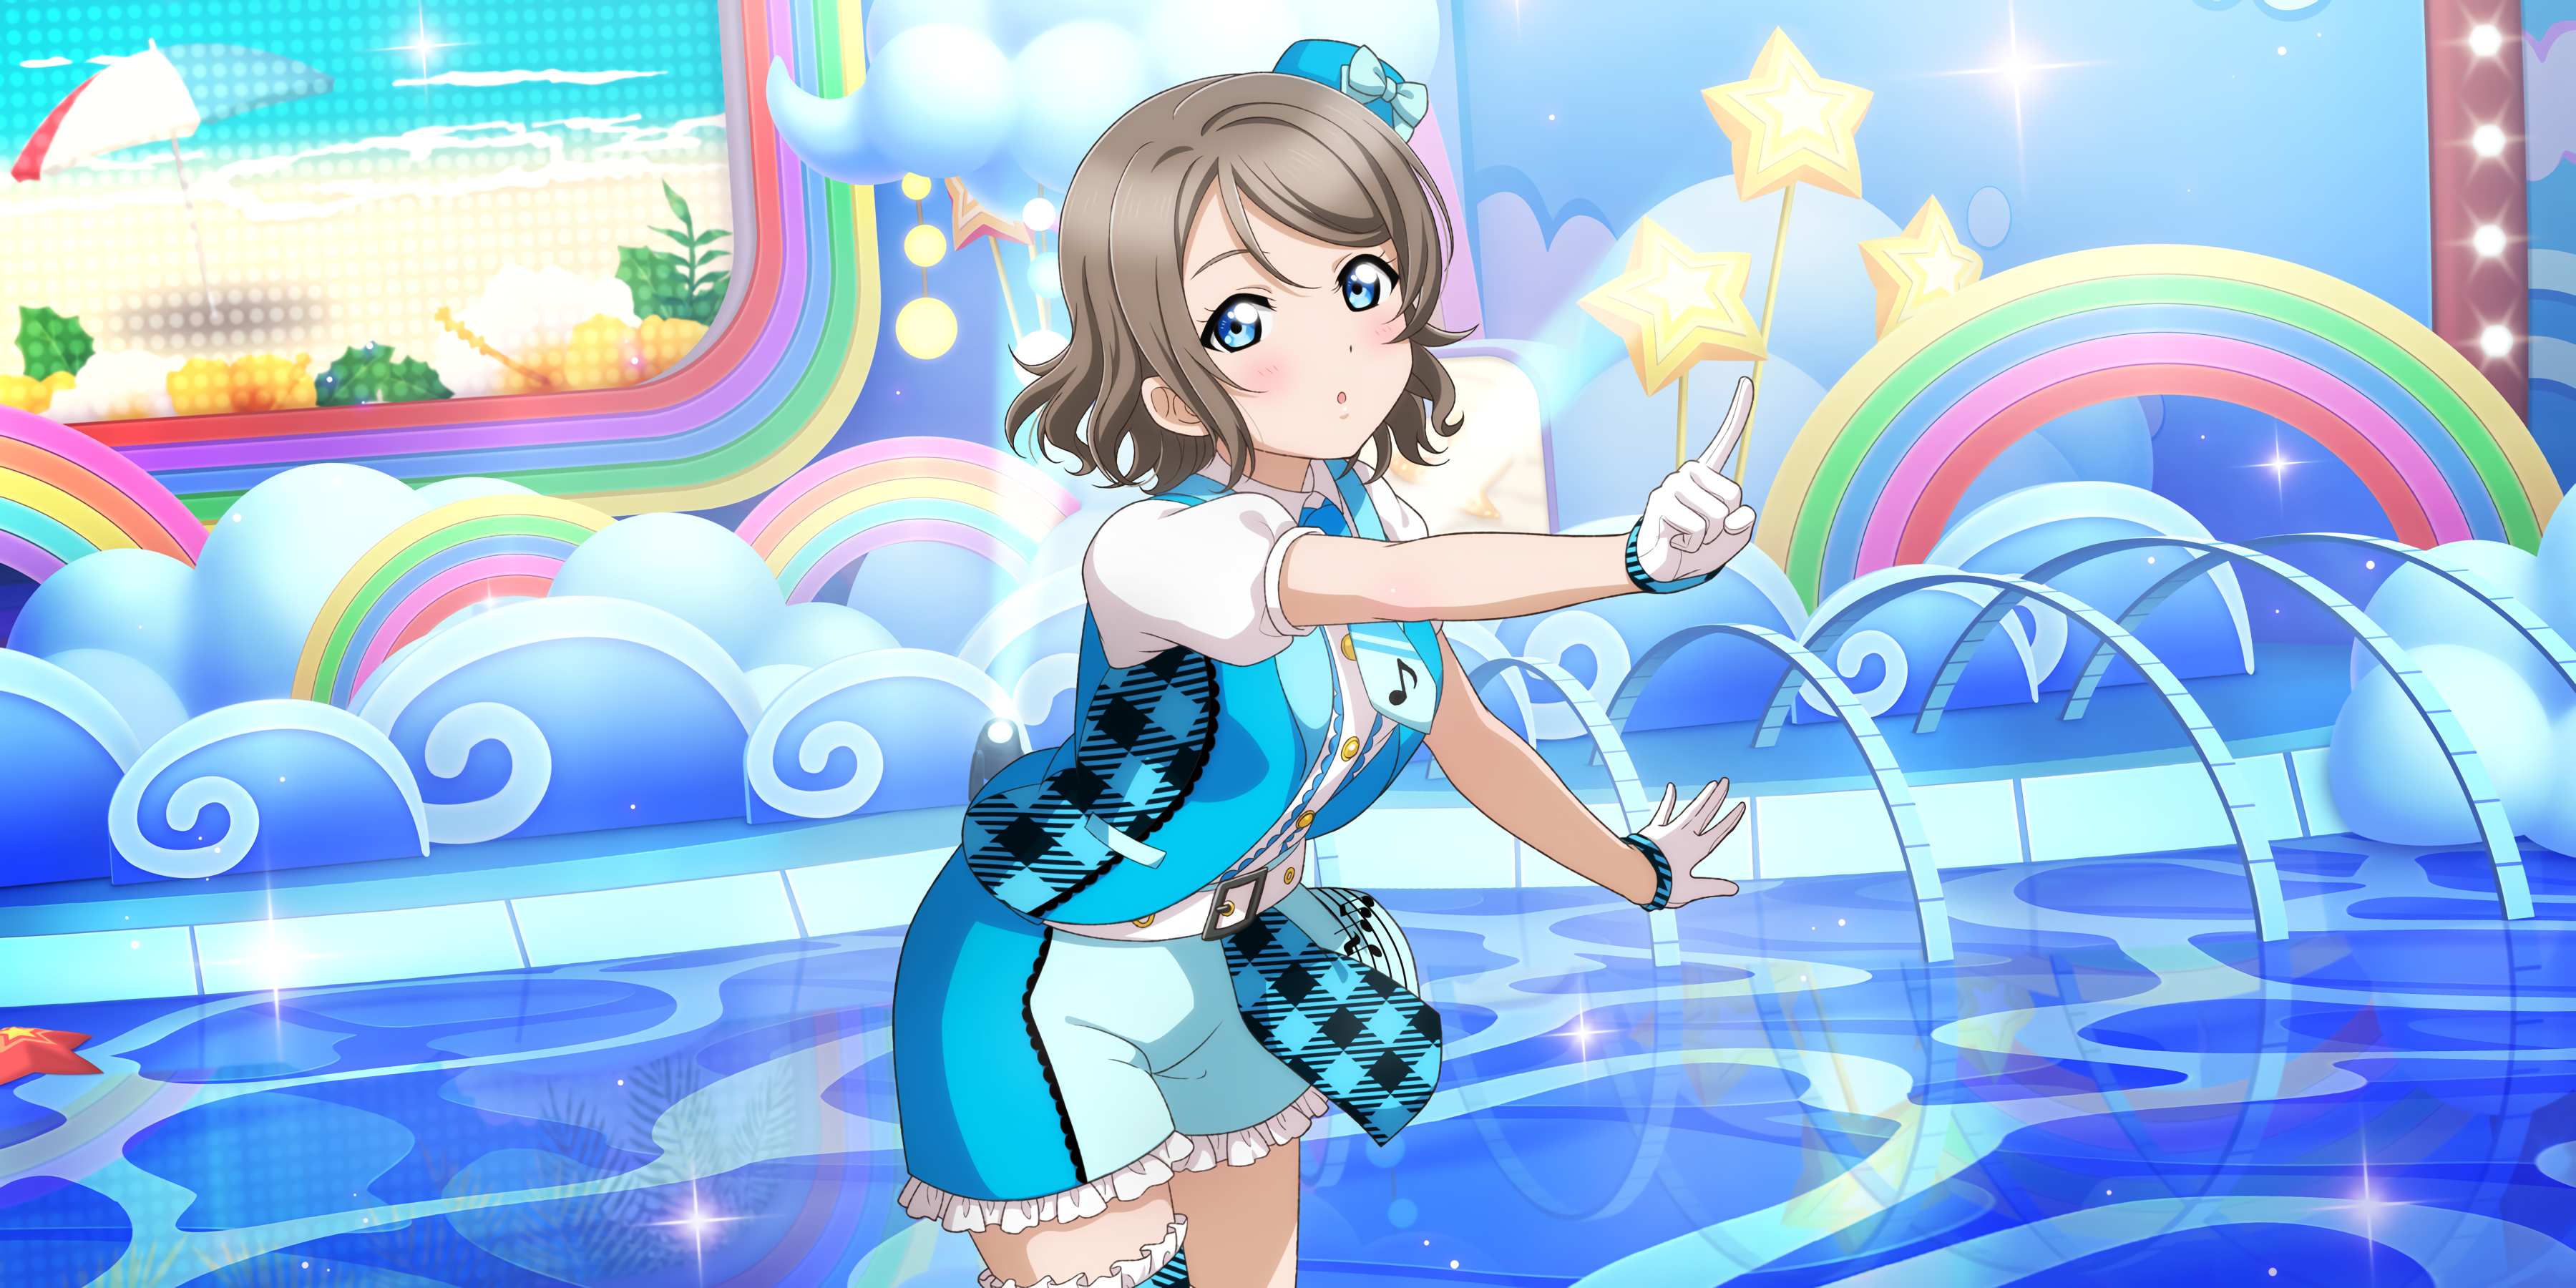 Anime 3600x1800 Watanabe You Love Live! Sunshine Love Live! anime anime girls gloves uniform rainbows stages stars hat